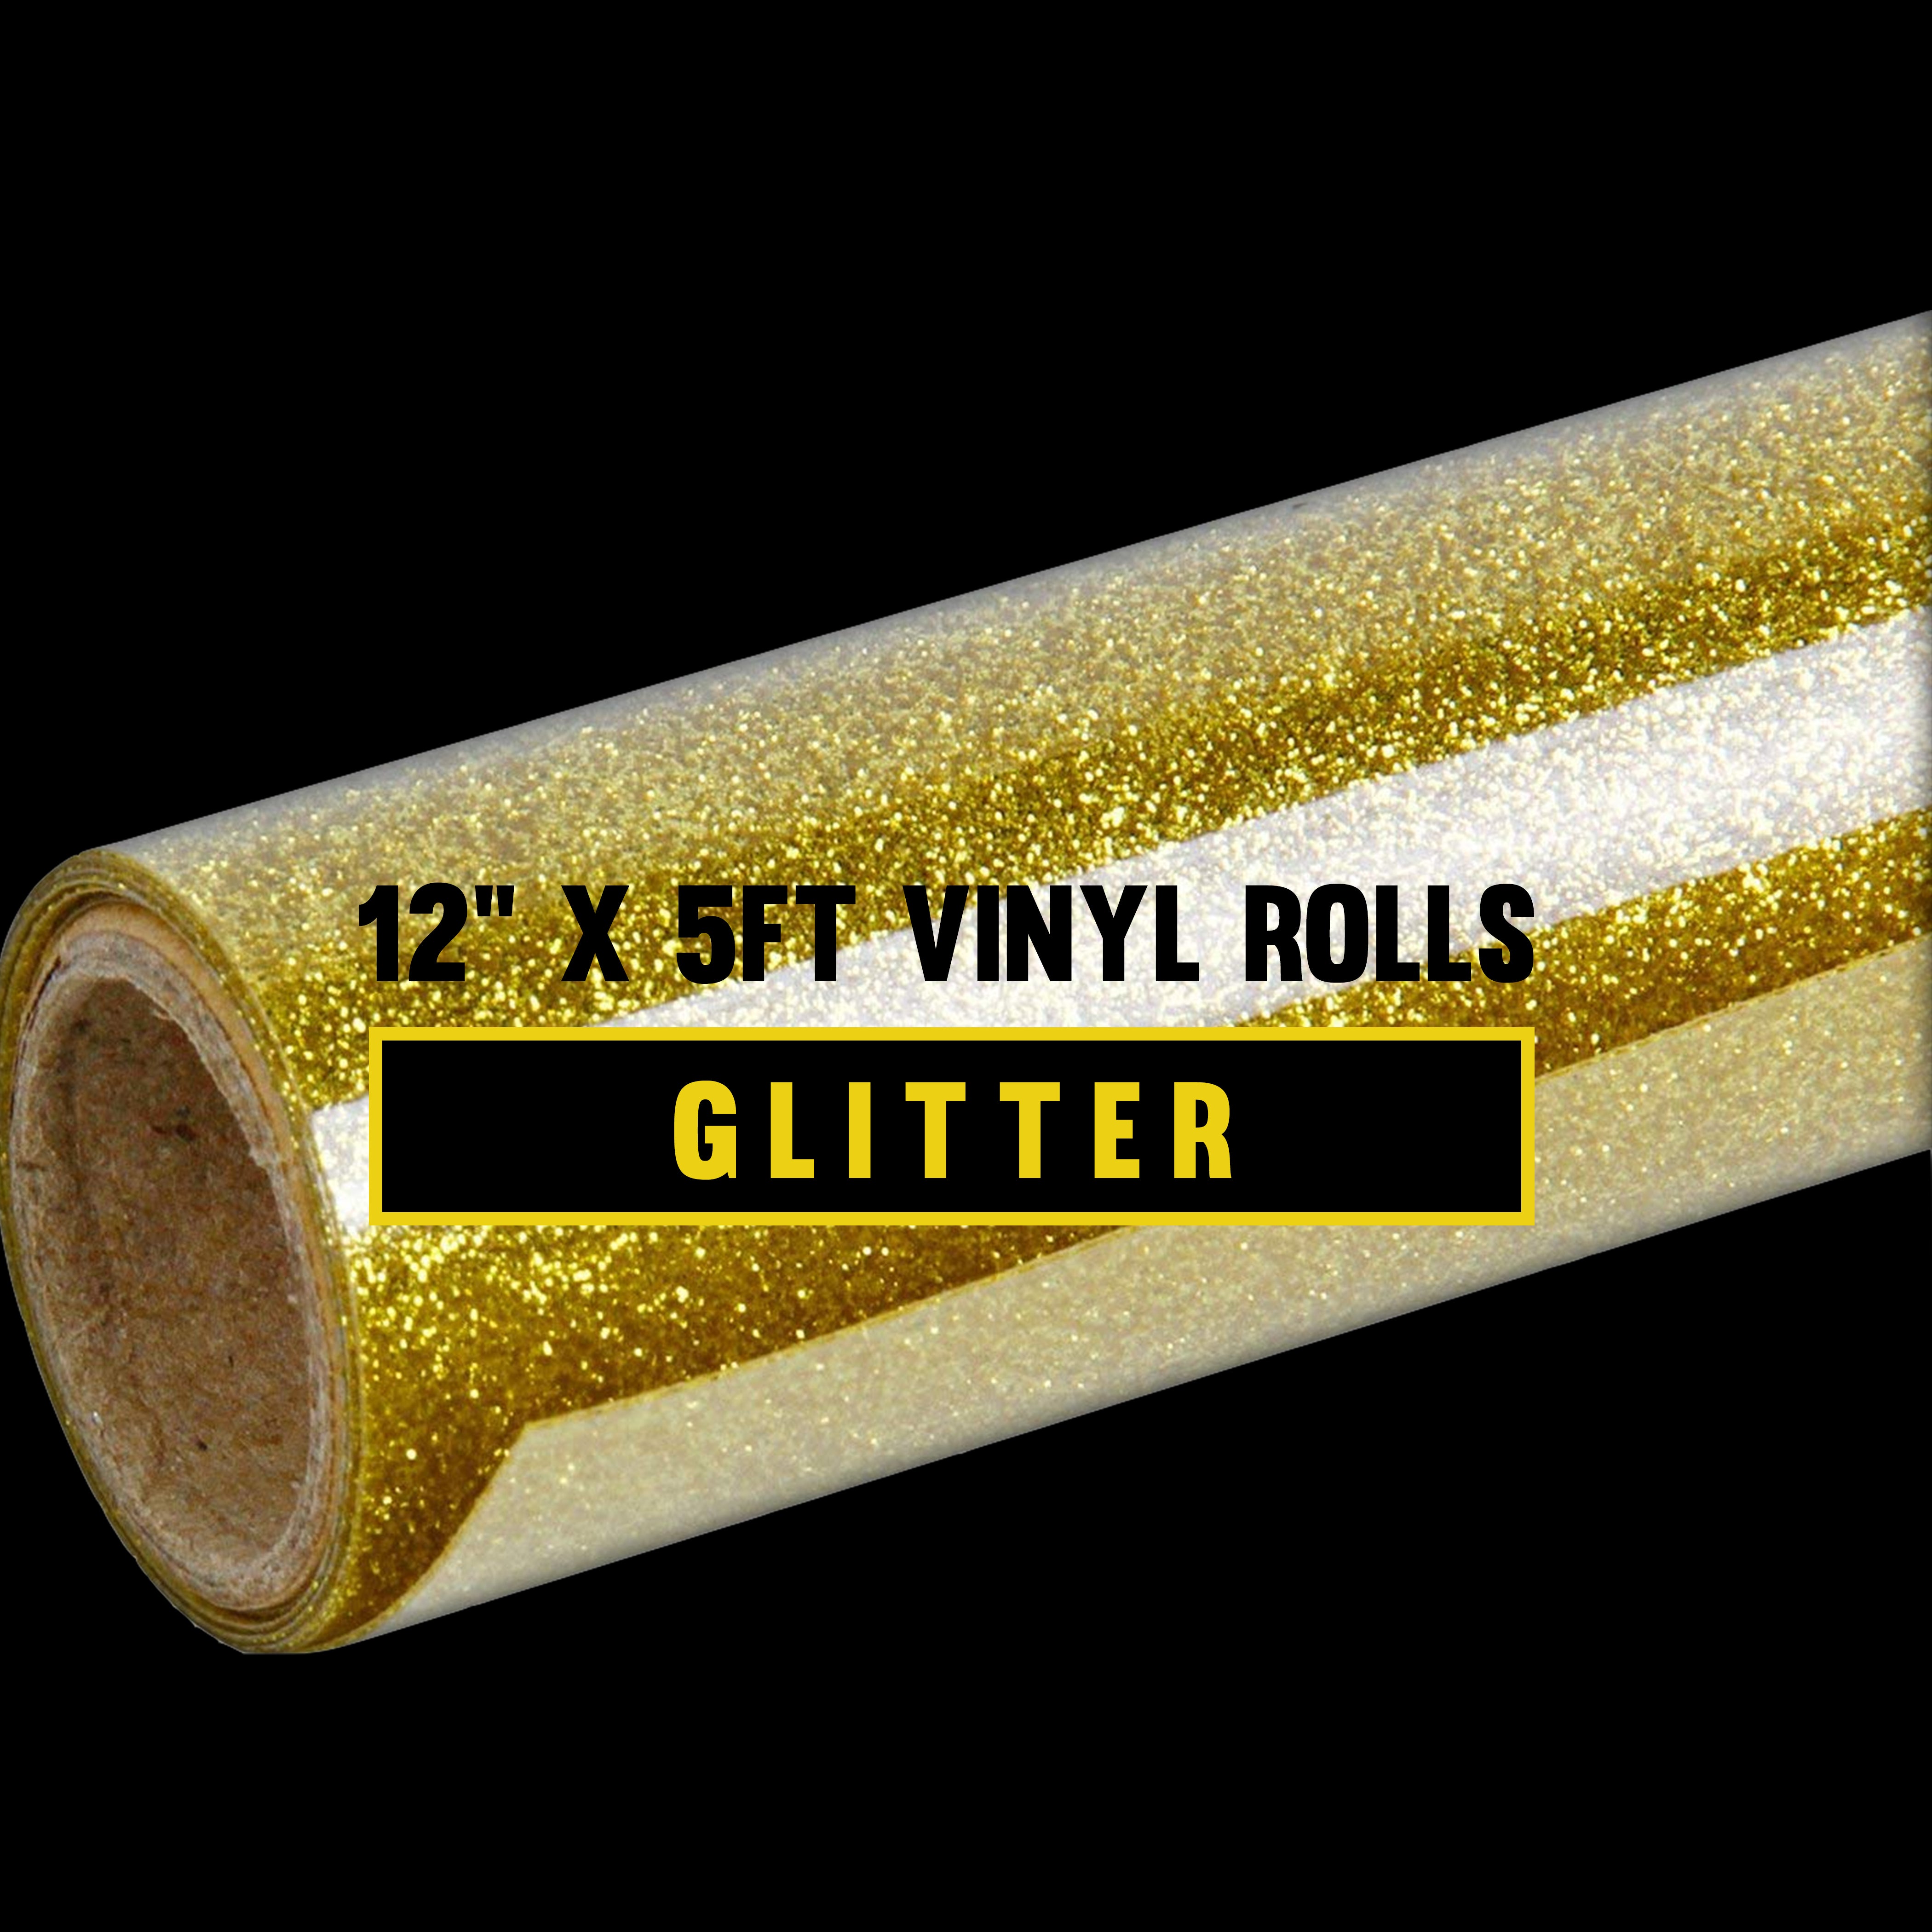 Siser Glitter Iron On Vinyl, Heat Transfer, 3 12 x 20 Rolls